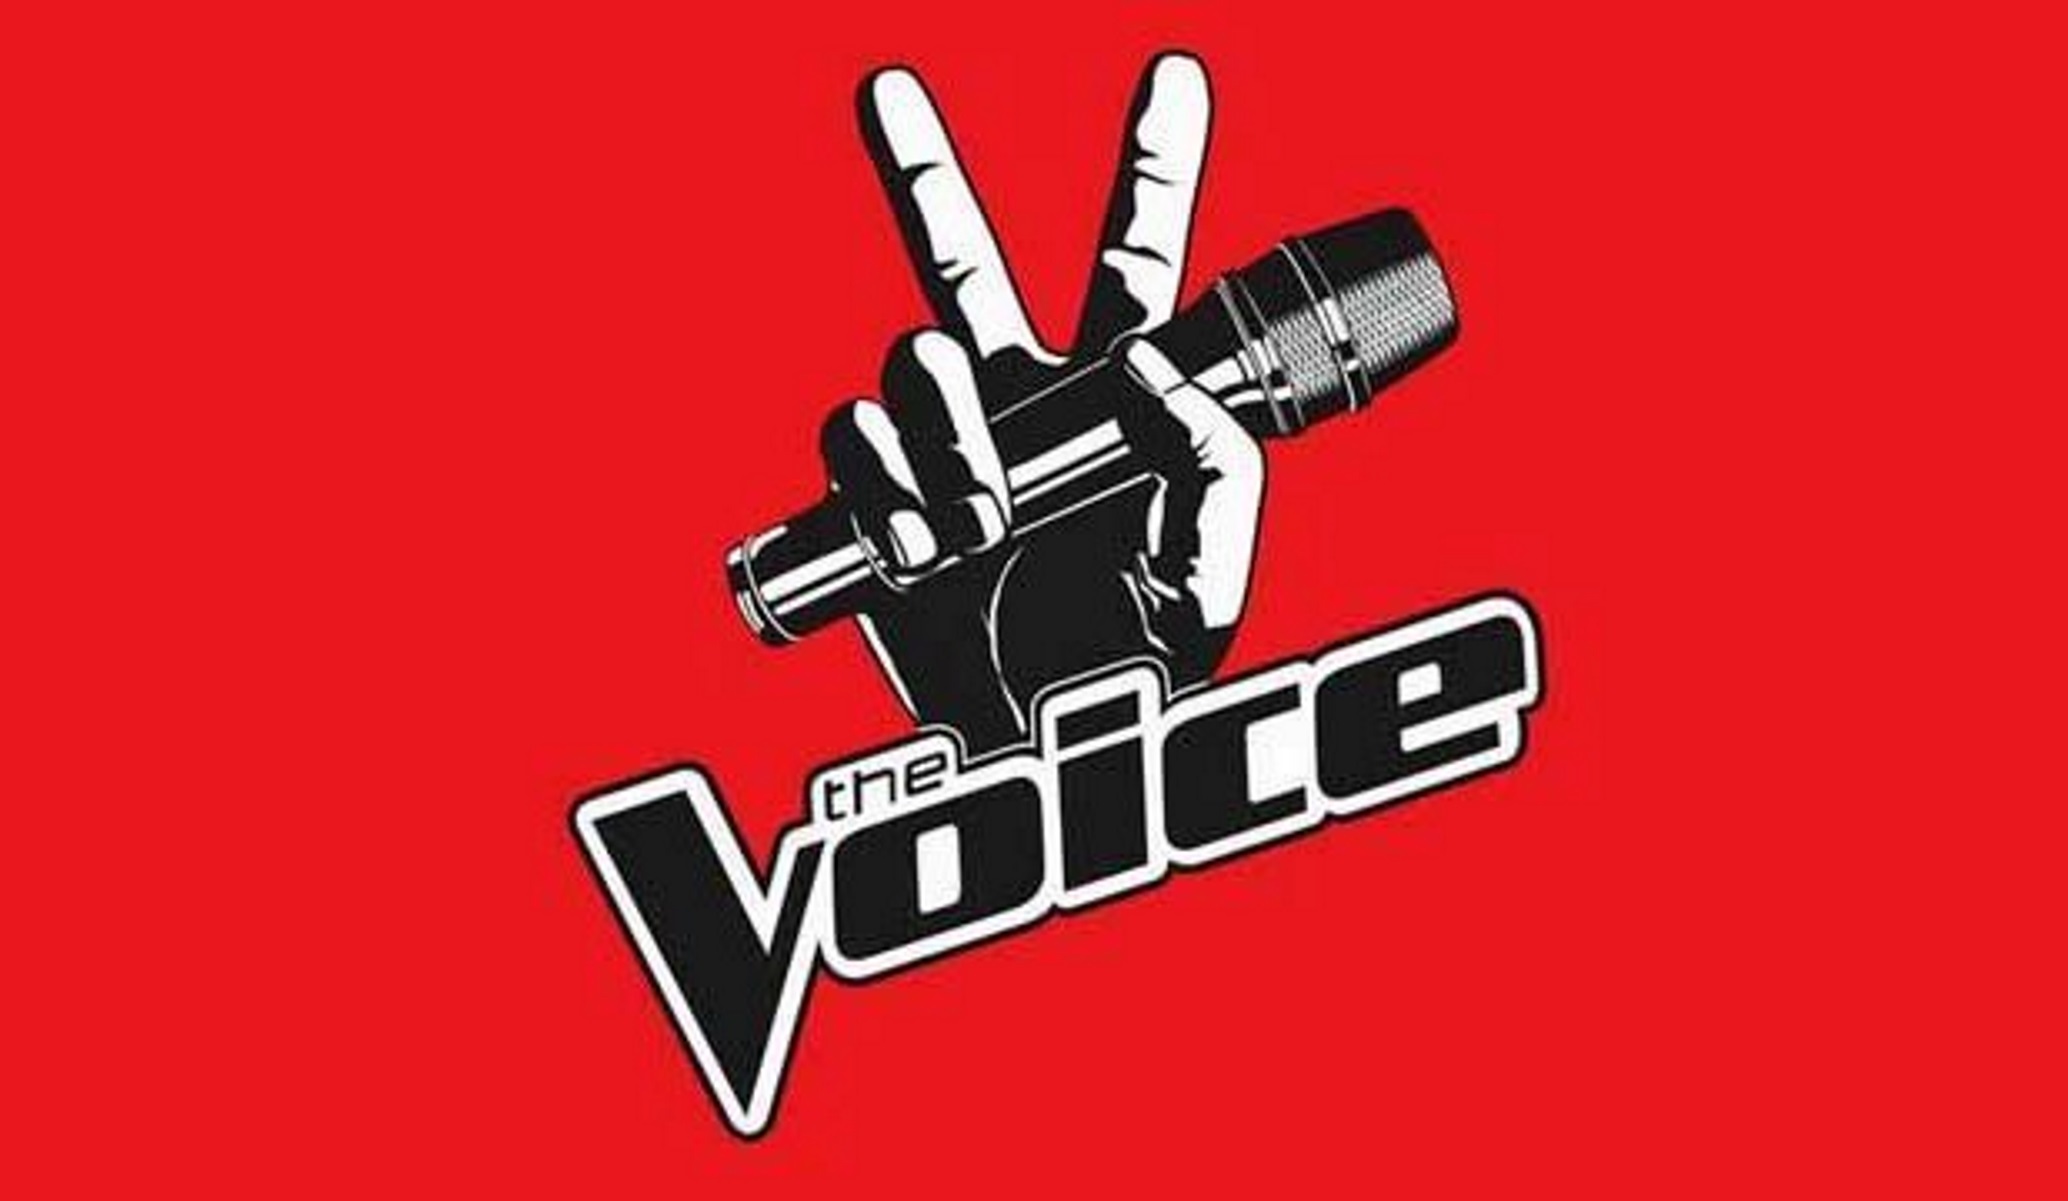 Voice. Шоу голос лого. Голос баннер. Голос Постер. Голос логотип вектор.